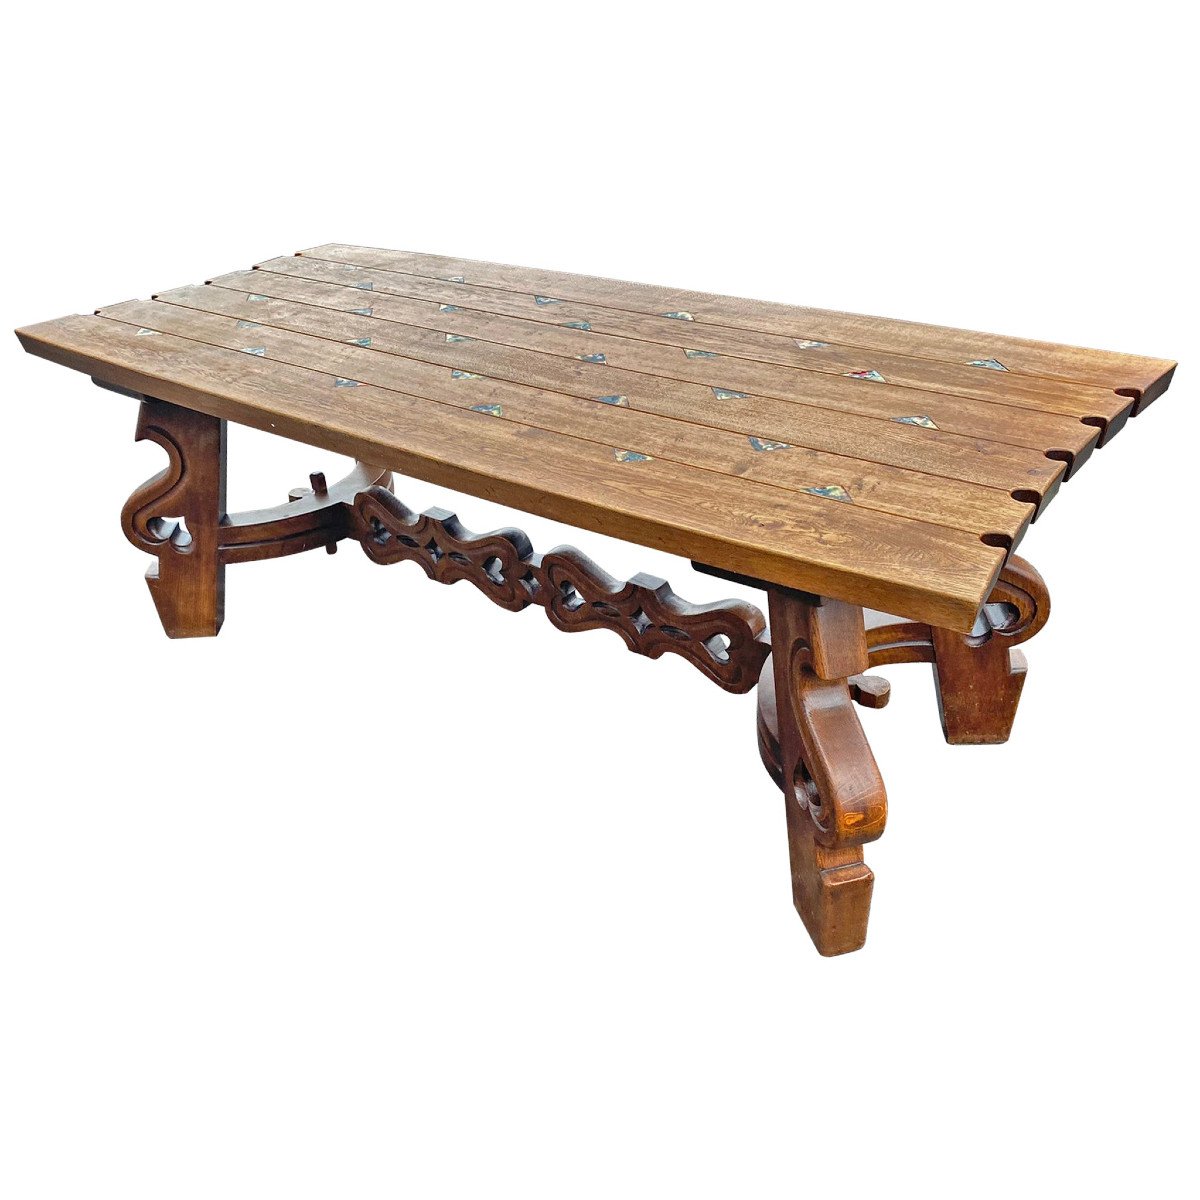 Large Original Neo Rustic Table In Solid Oak Circa 1960